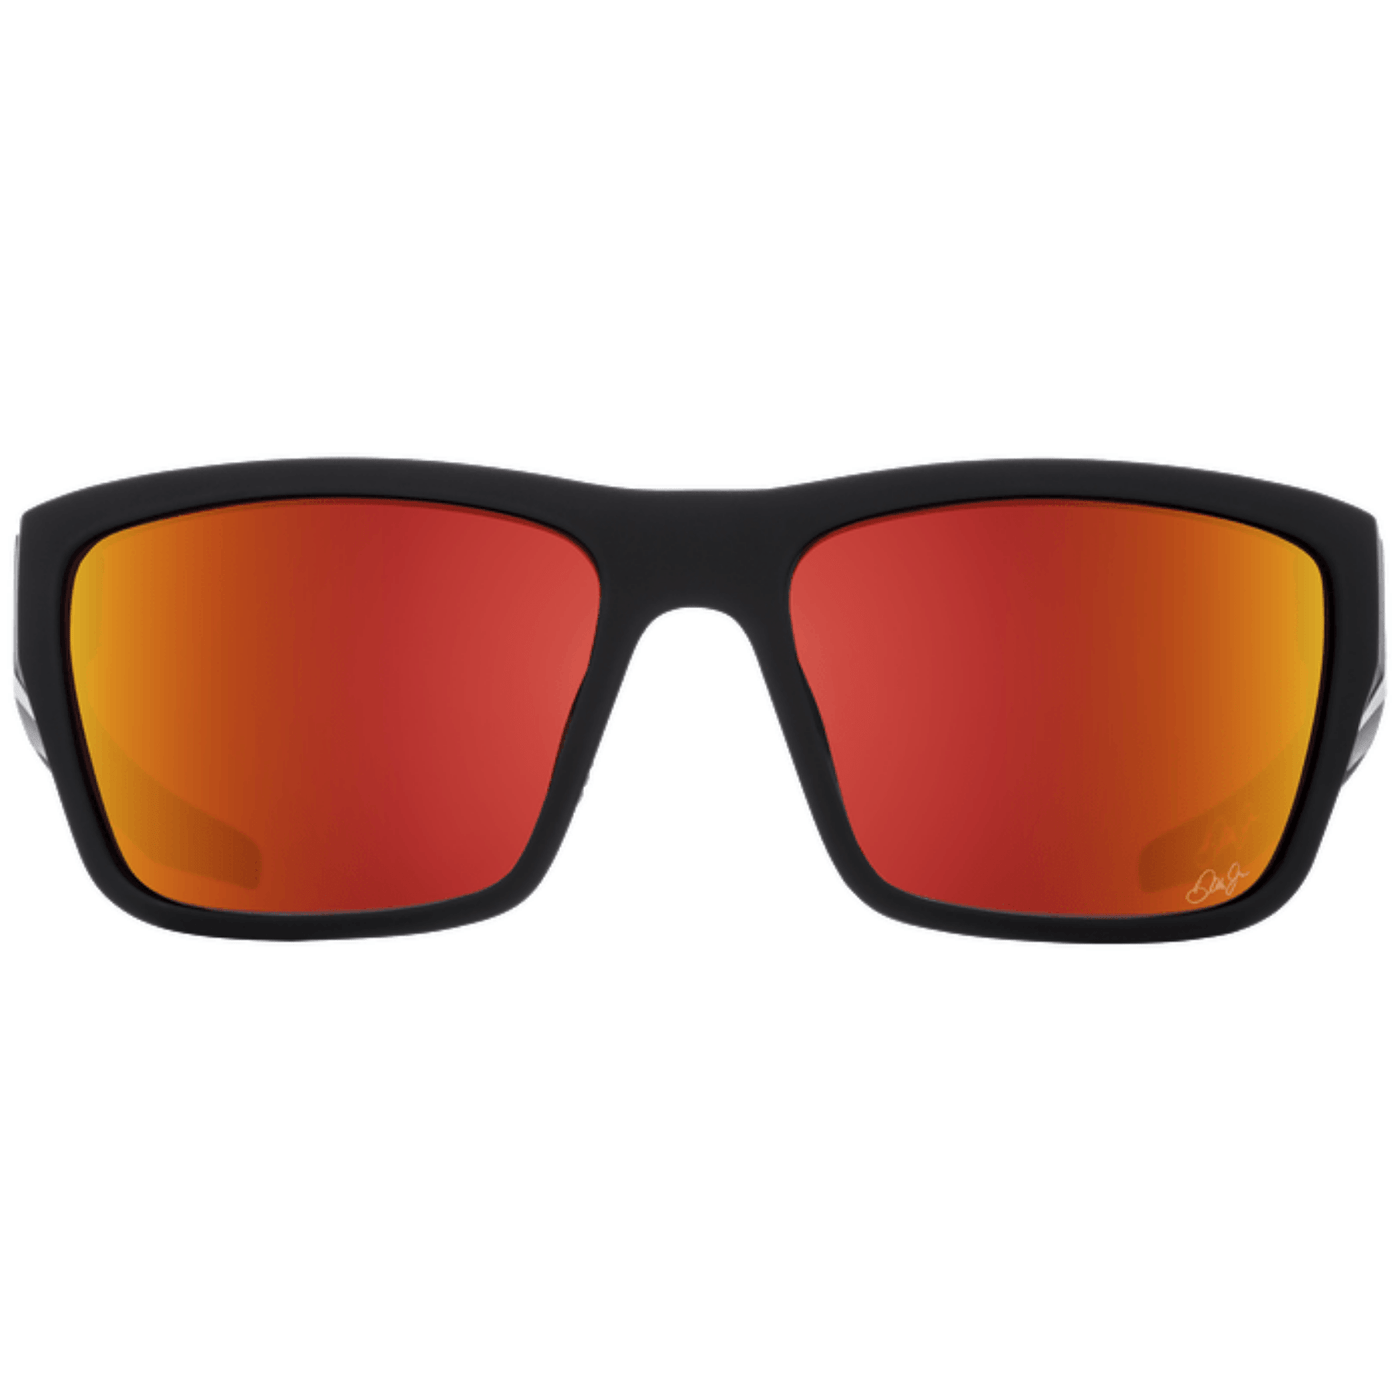 sunglasses for beach volleyball - orange